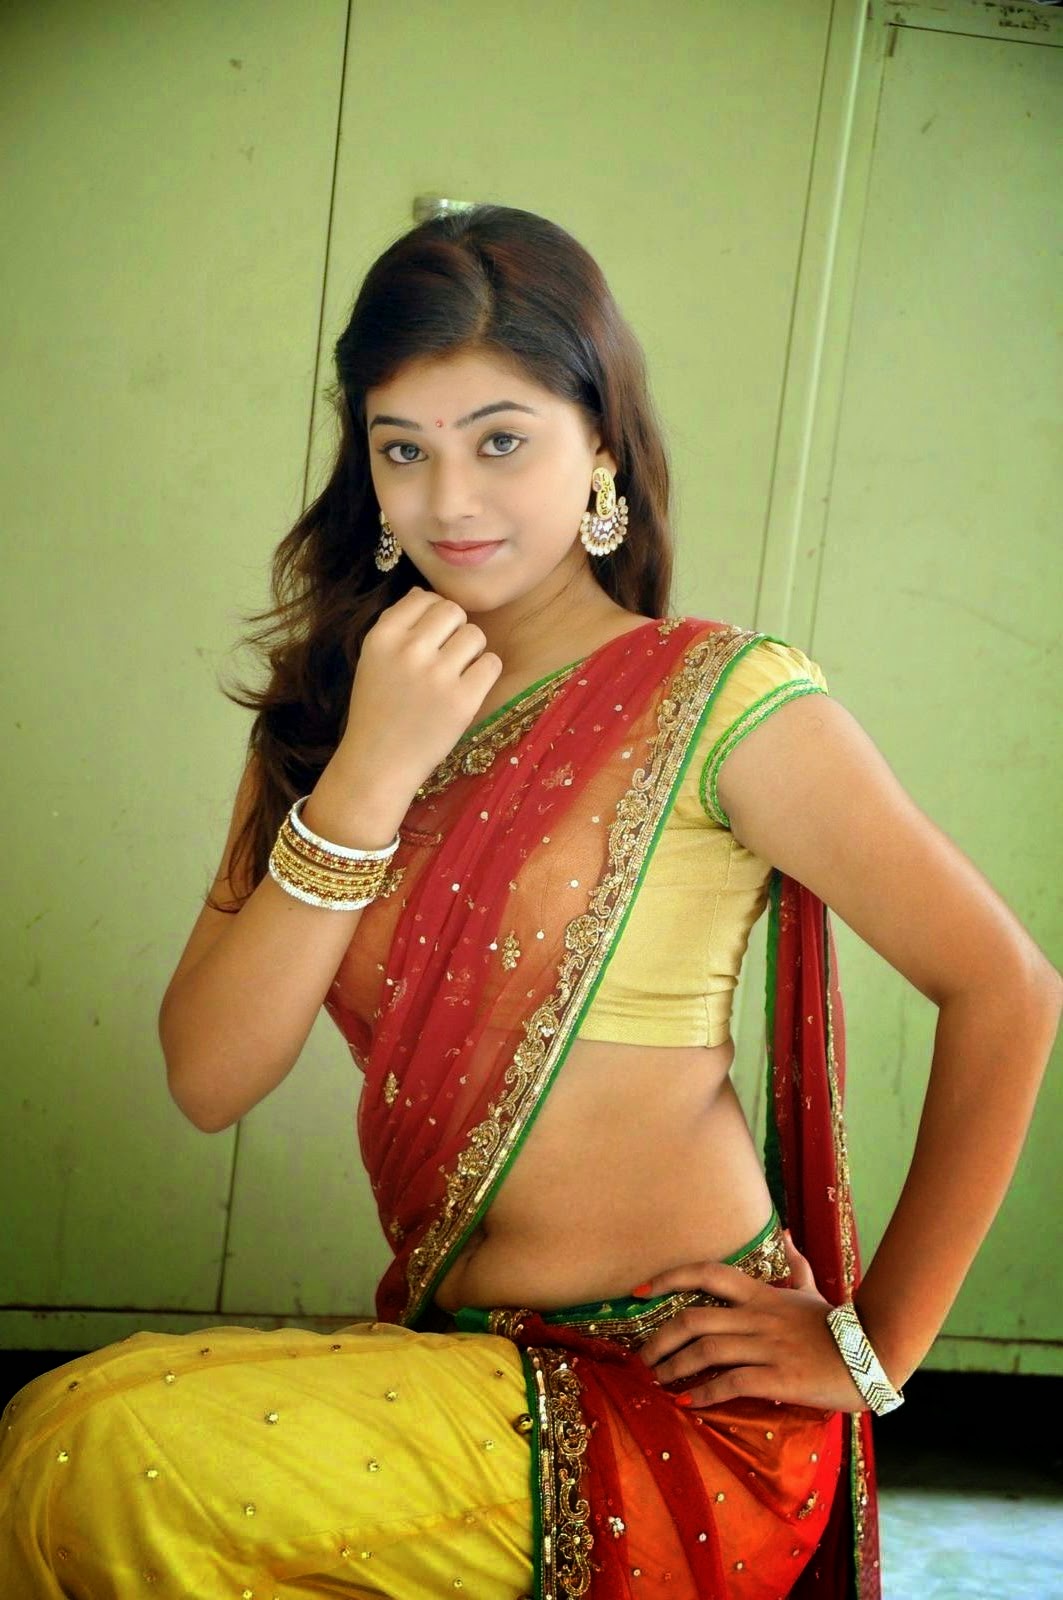 You Tube Xxx South Indian Actress Blue Film - Sexy South Indian Actress Hot Pics in Saree - HD Art Wallpapers